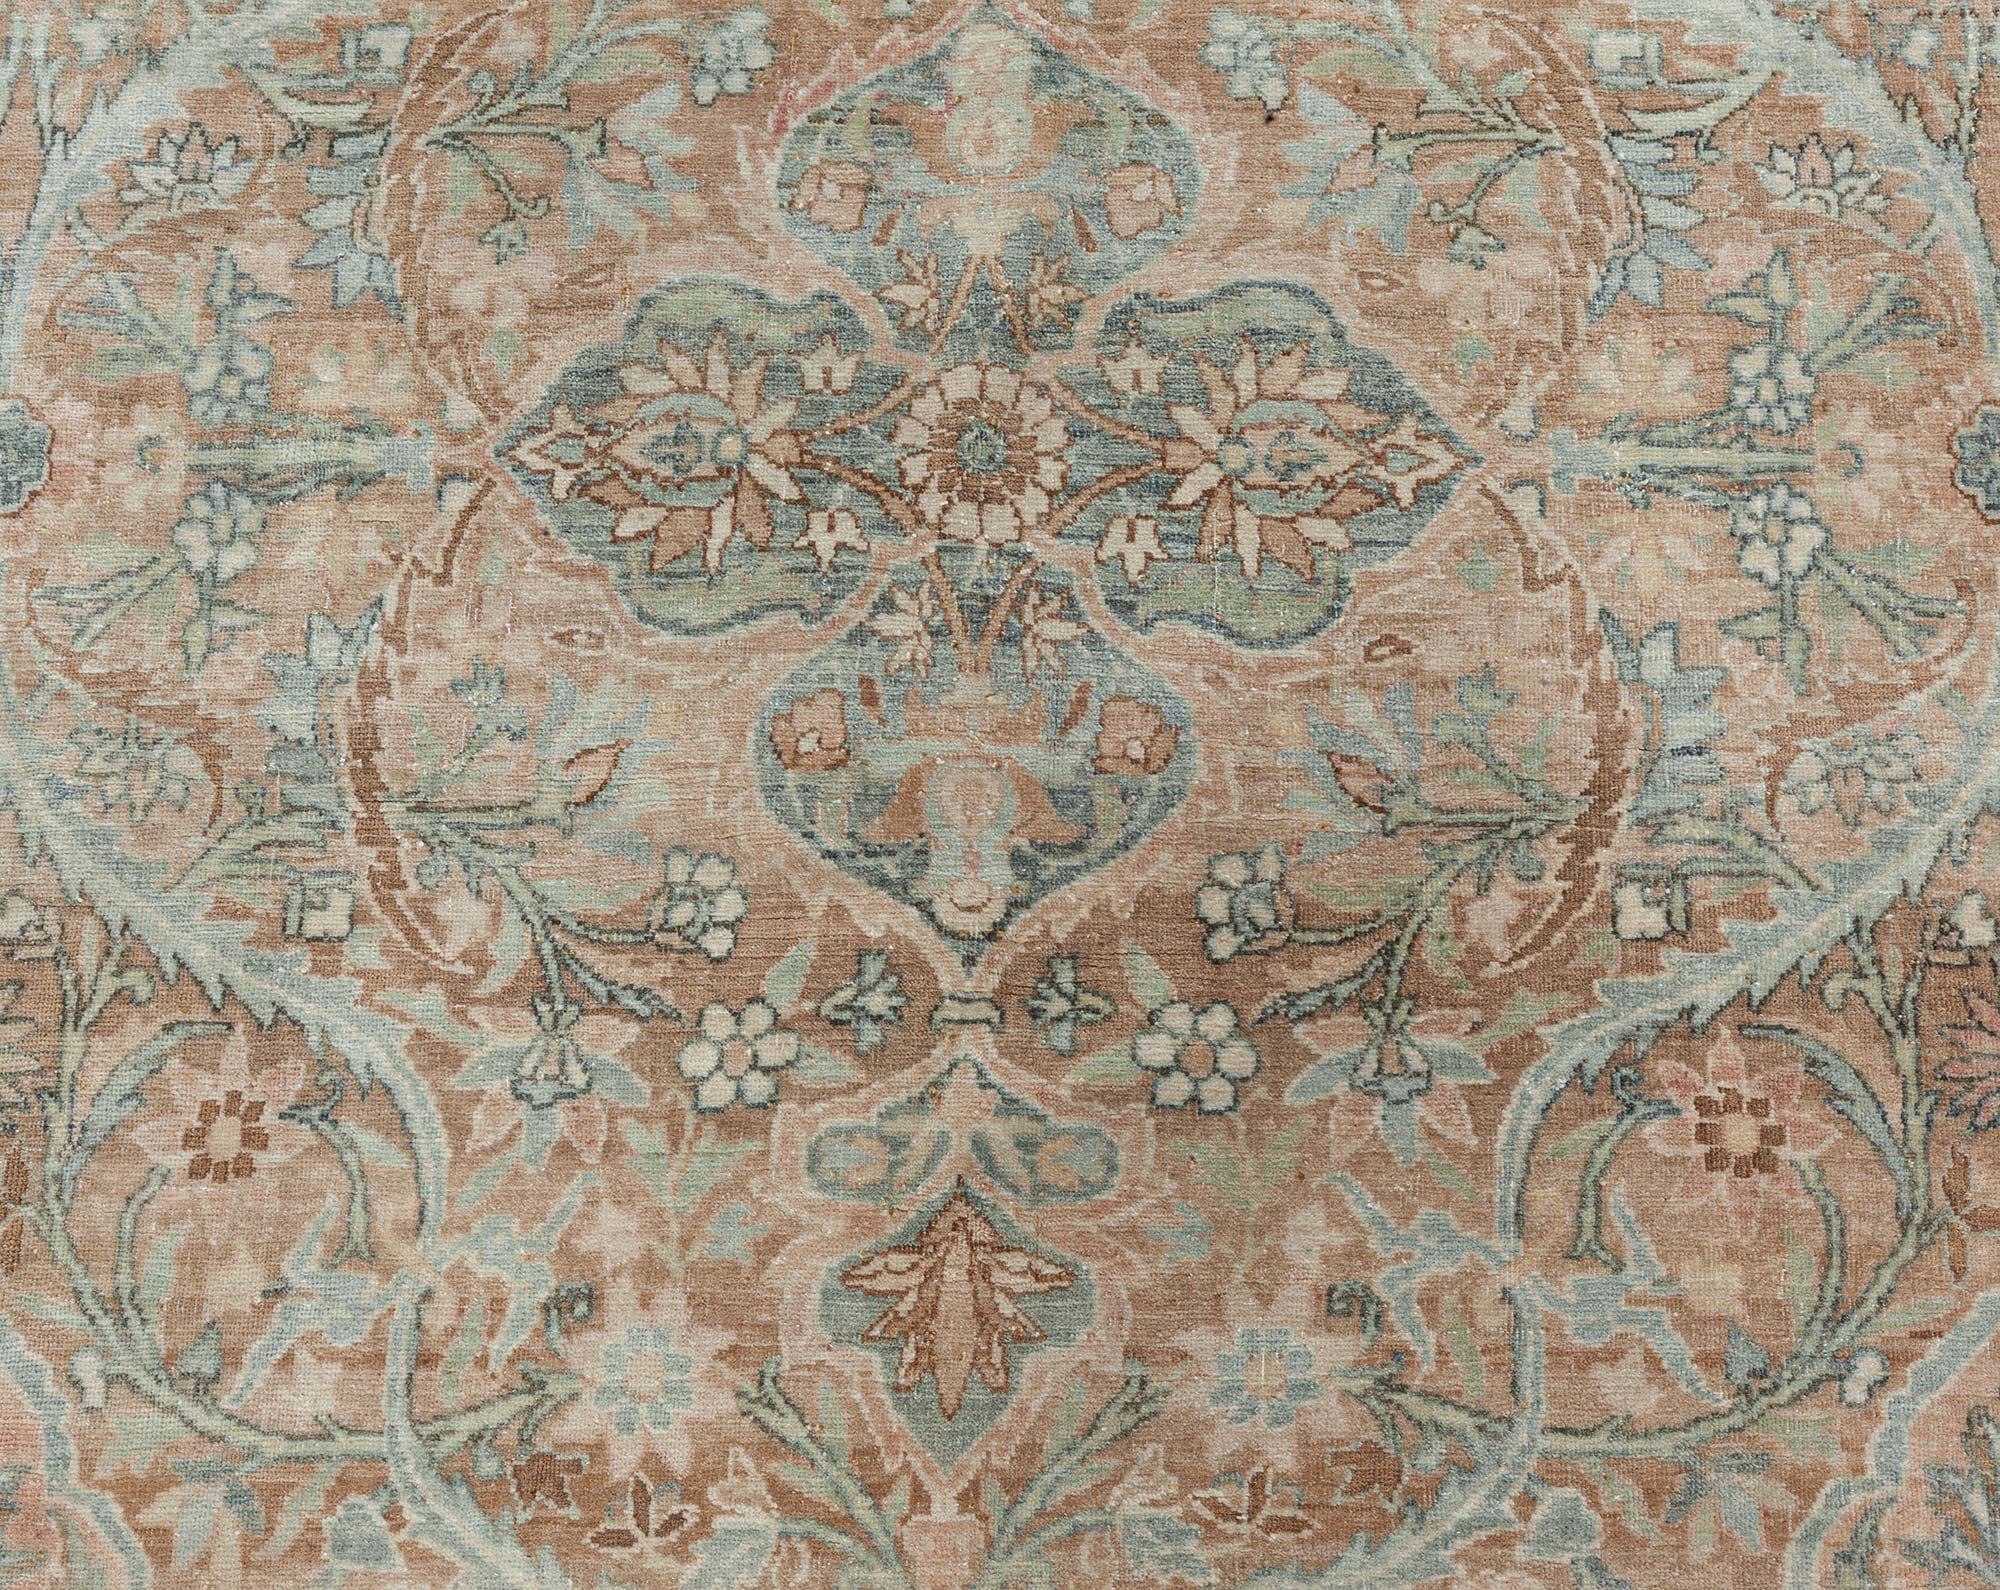 Antique Persian Kirman rug.
Size: 9'0